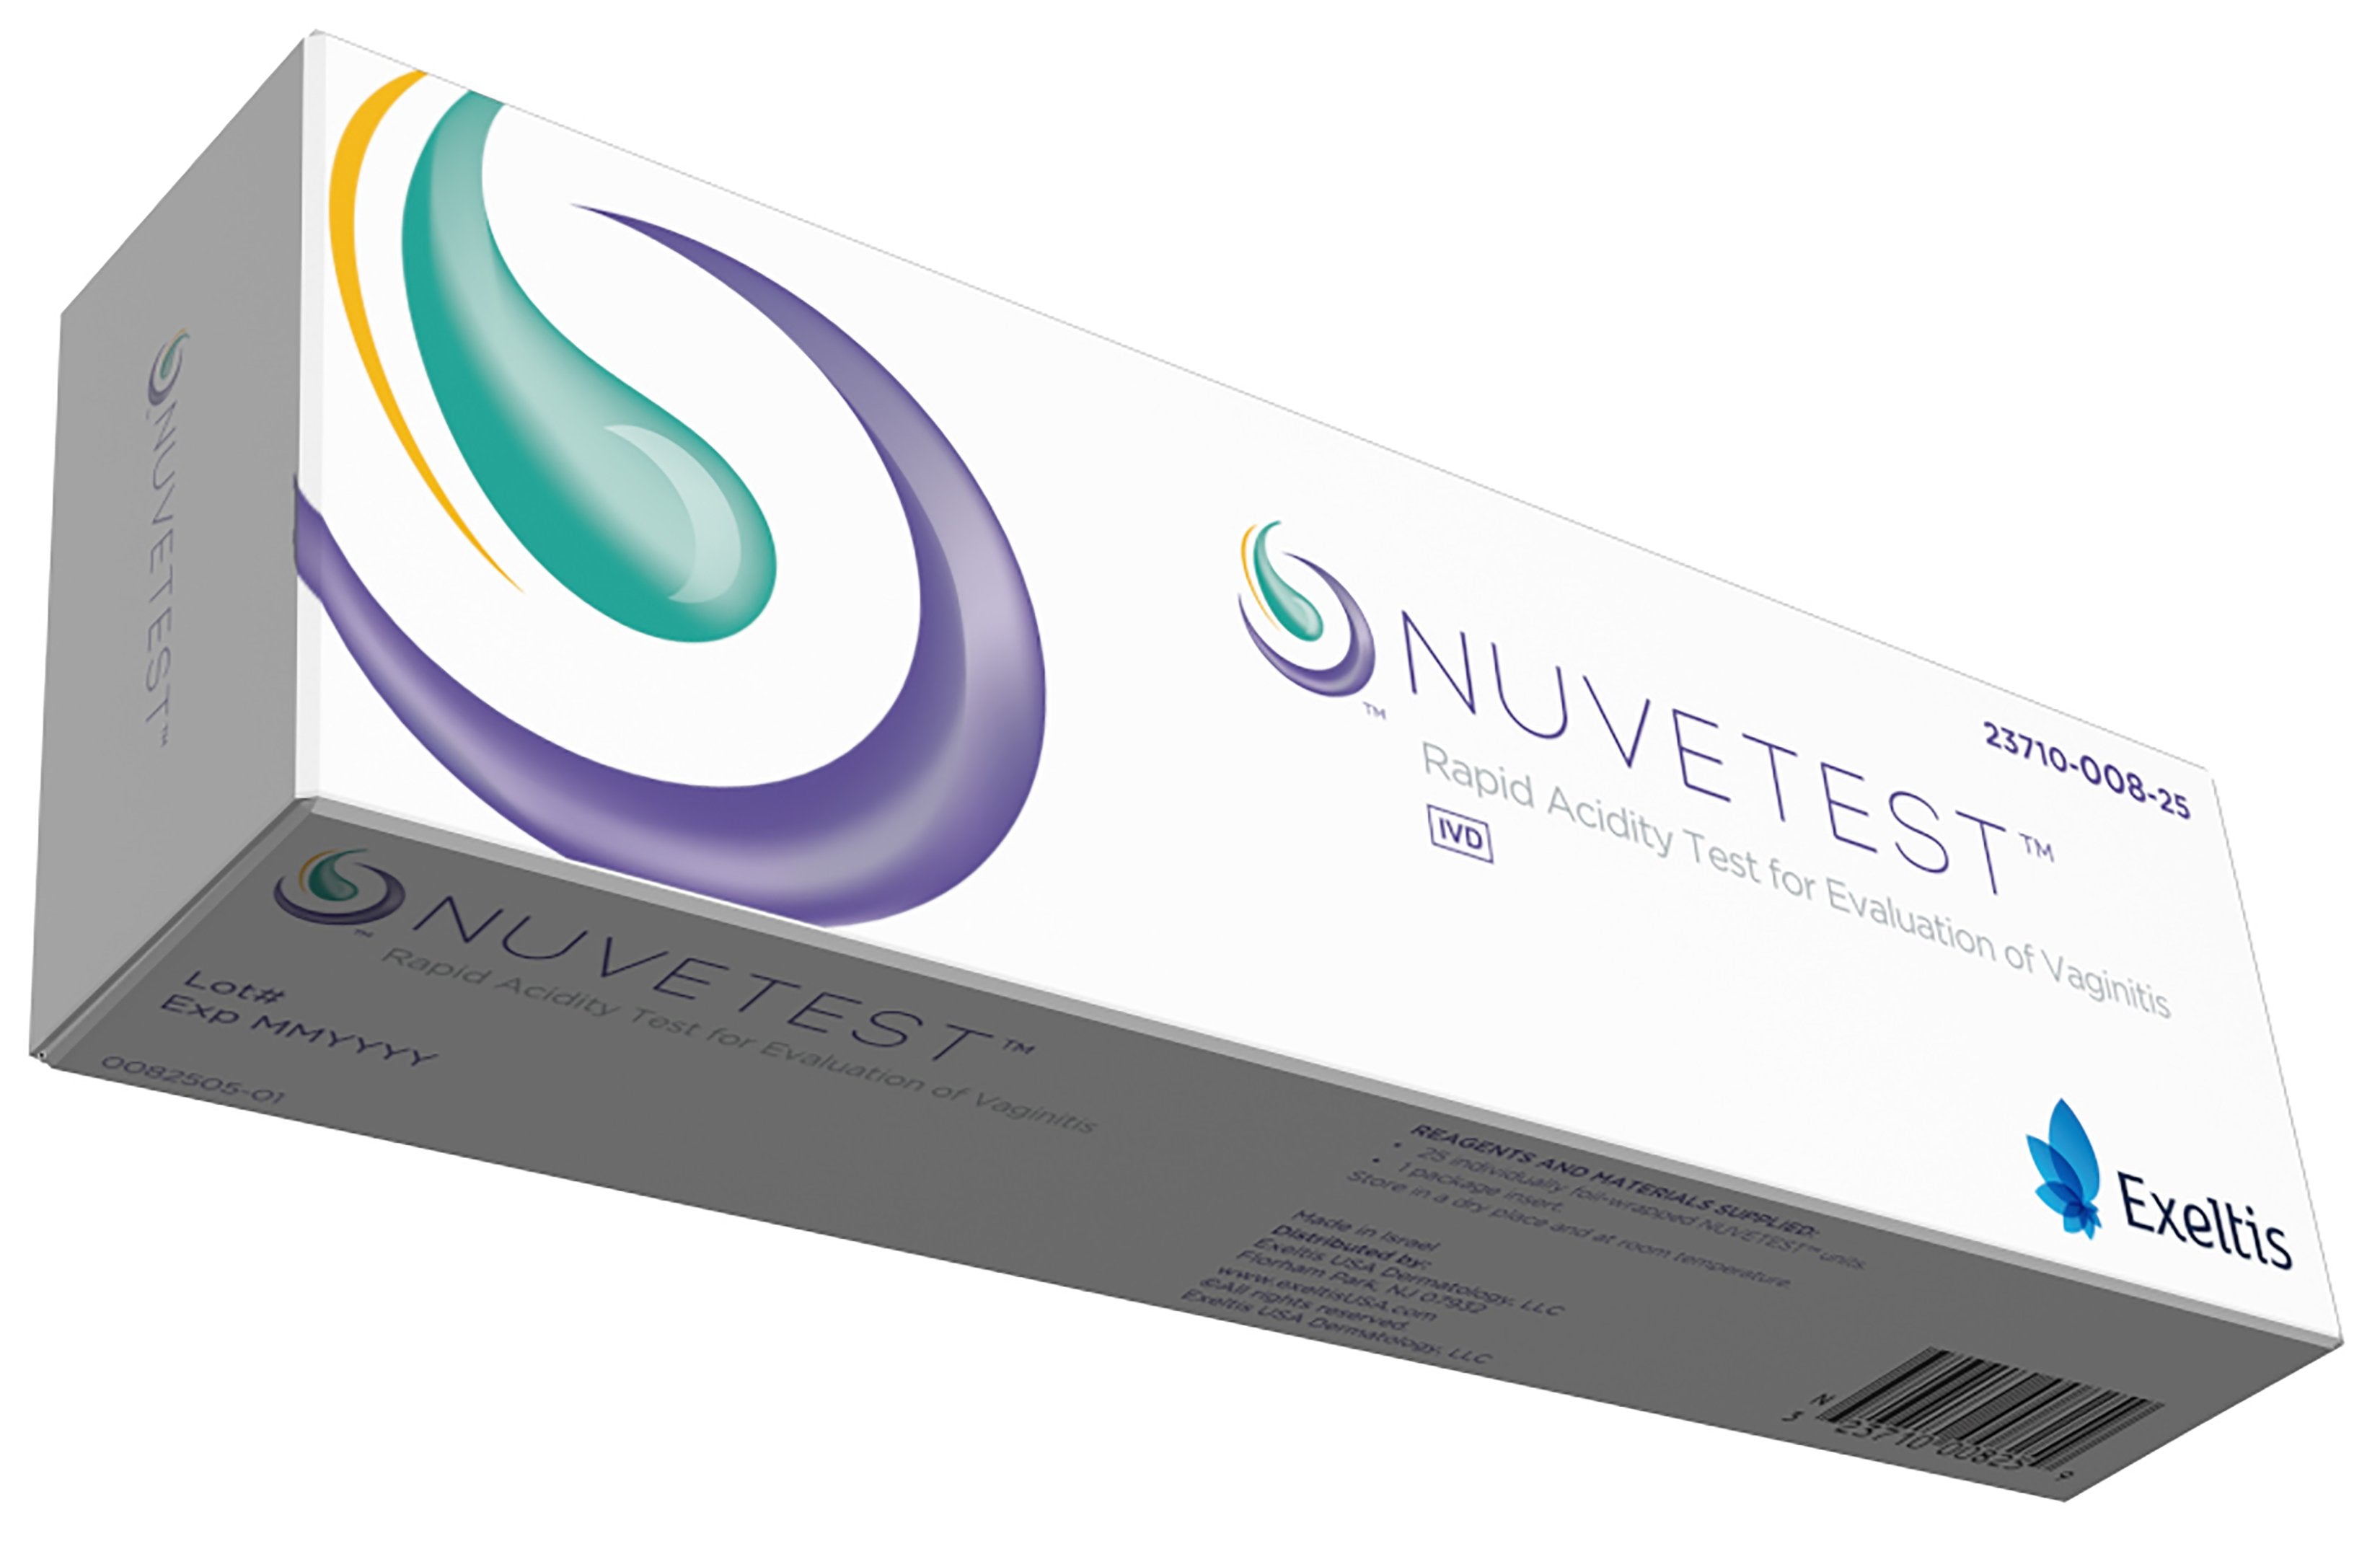 Sexual Health Test Kit NuveTest Rapid Acidity Test Bacterial Vaginosis (BV) / Trichomoniasis Test Vaginal Secretion Sample 25 Tests CLIA Waived